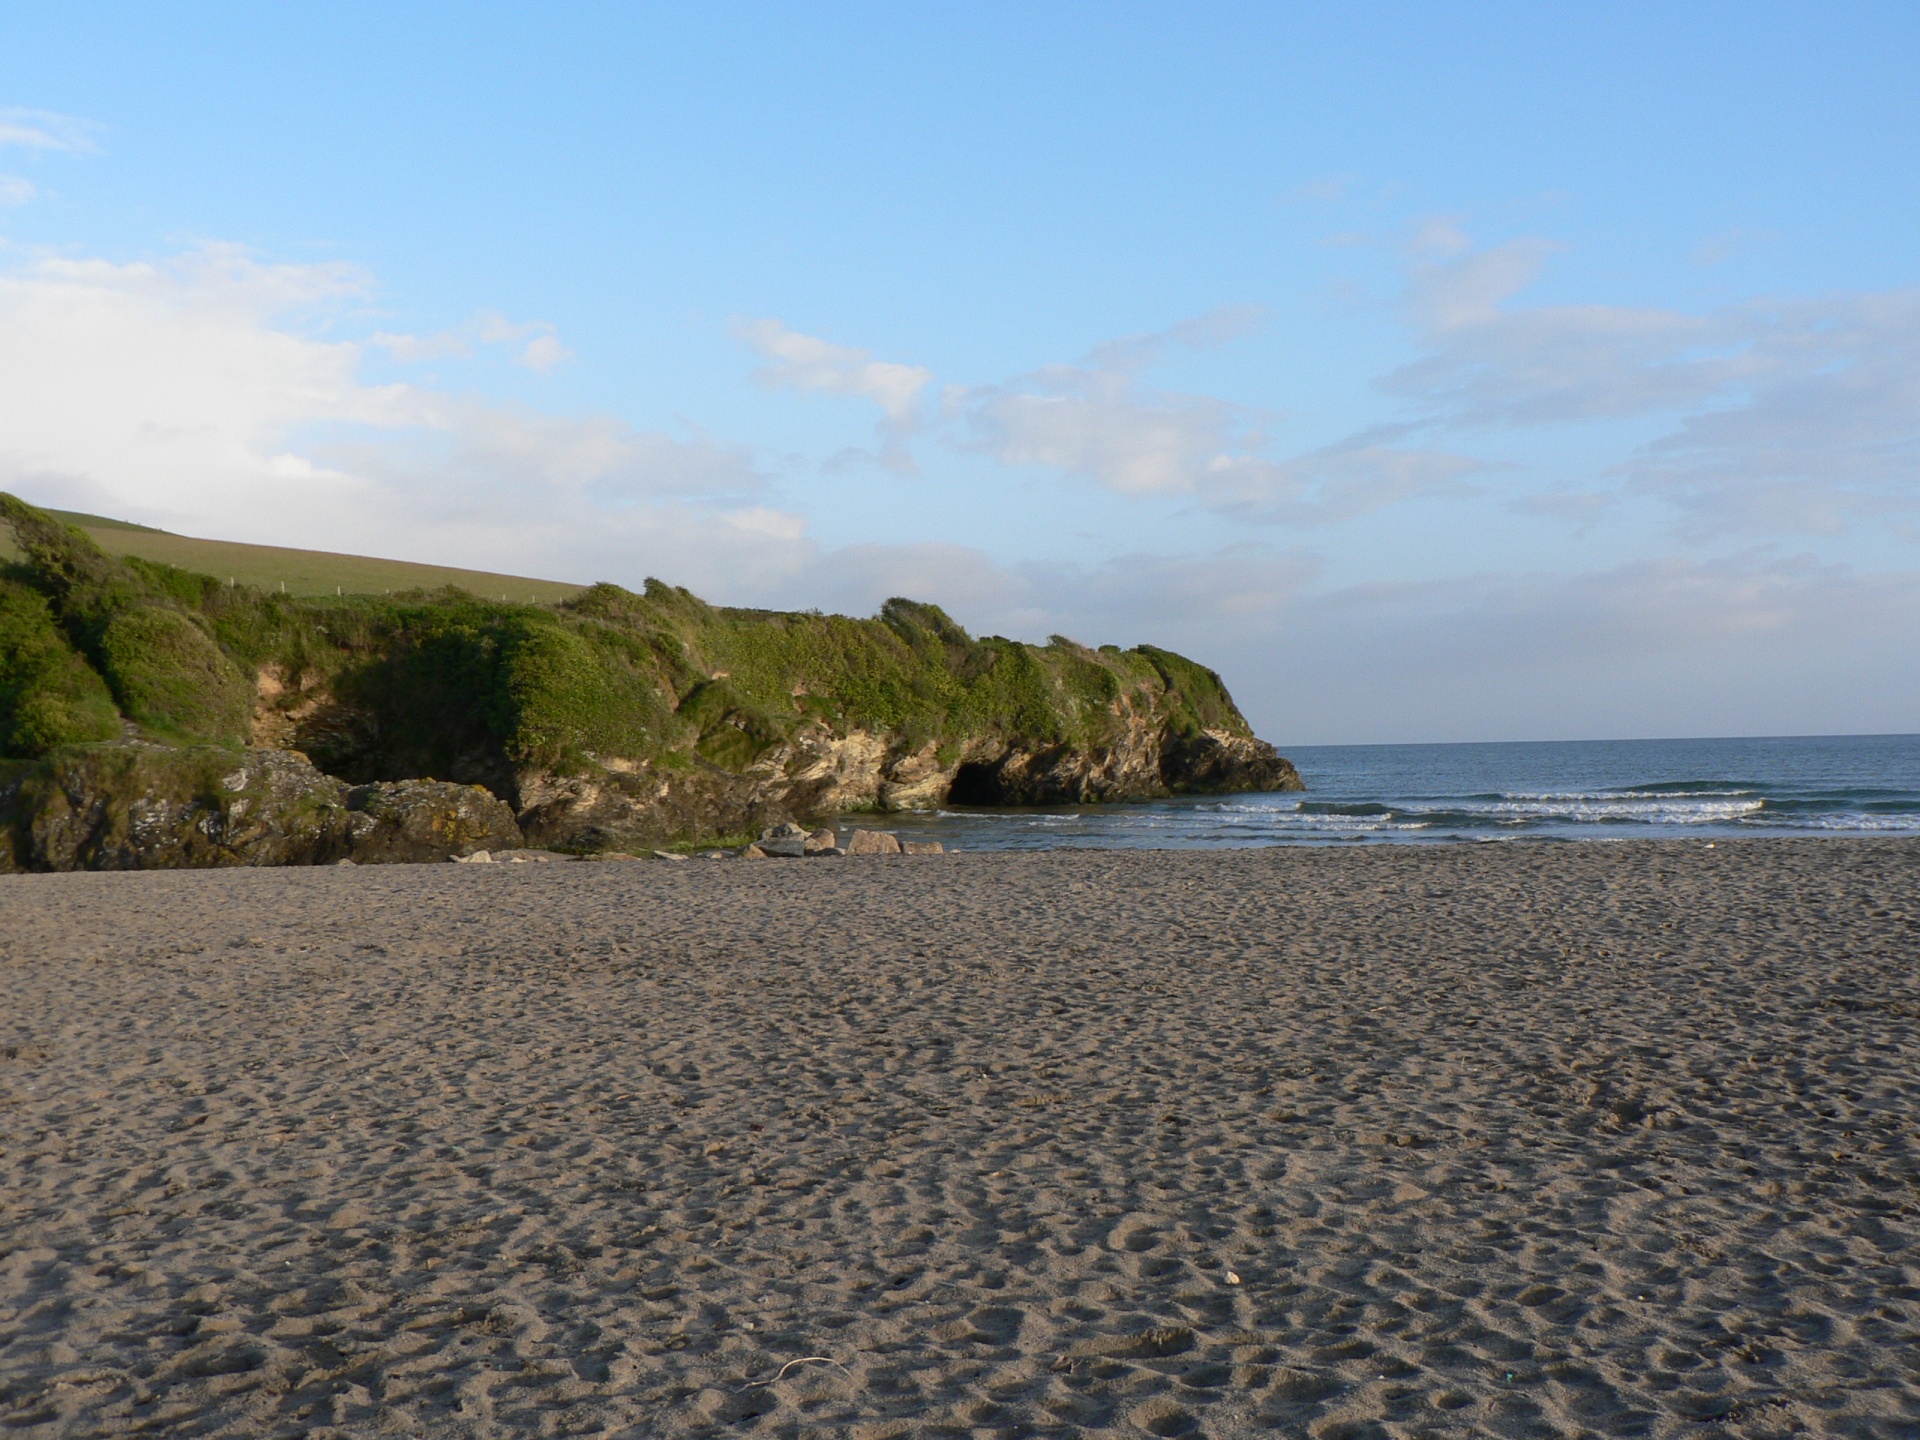 The beach at Par in Cornwall